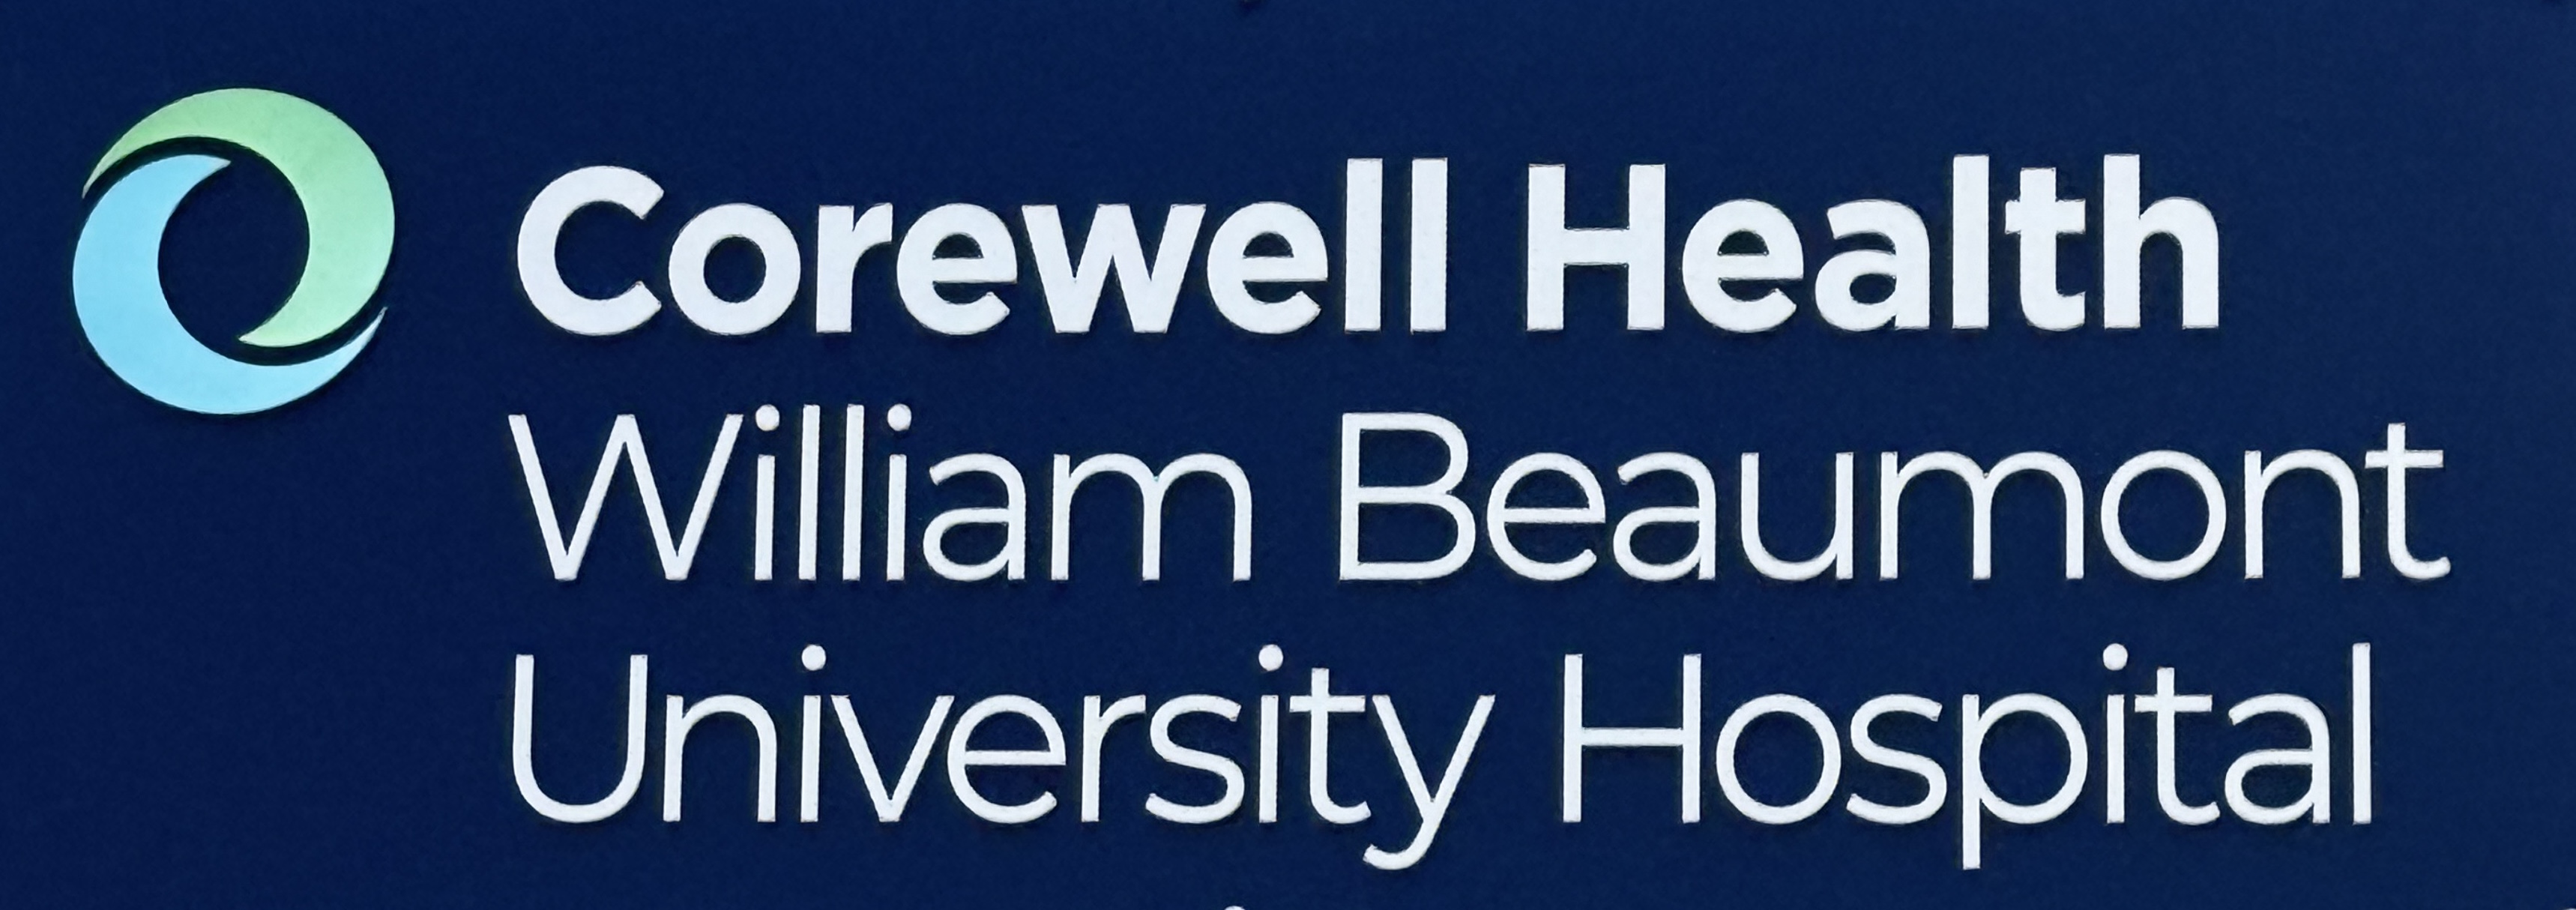 Corewell Health William Beaumont University Hospital